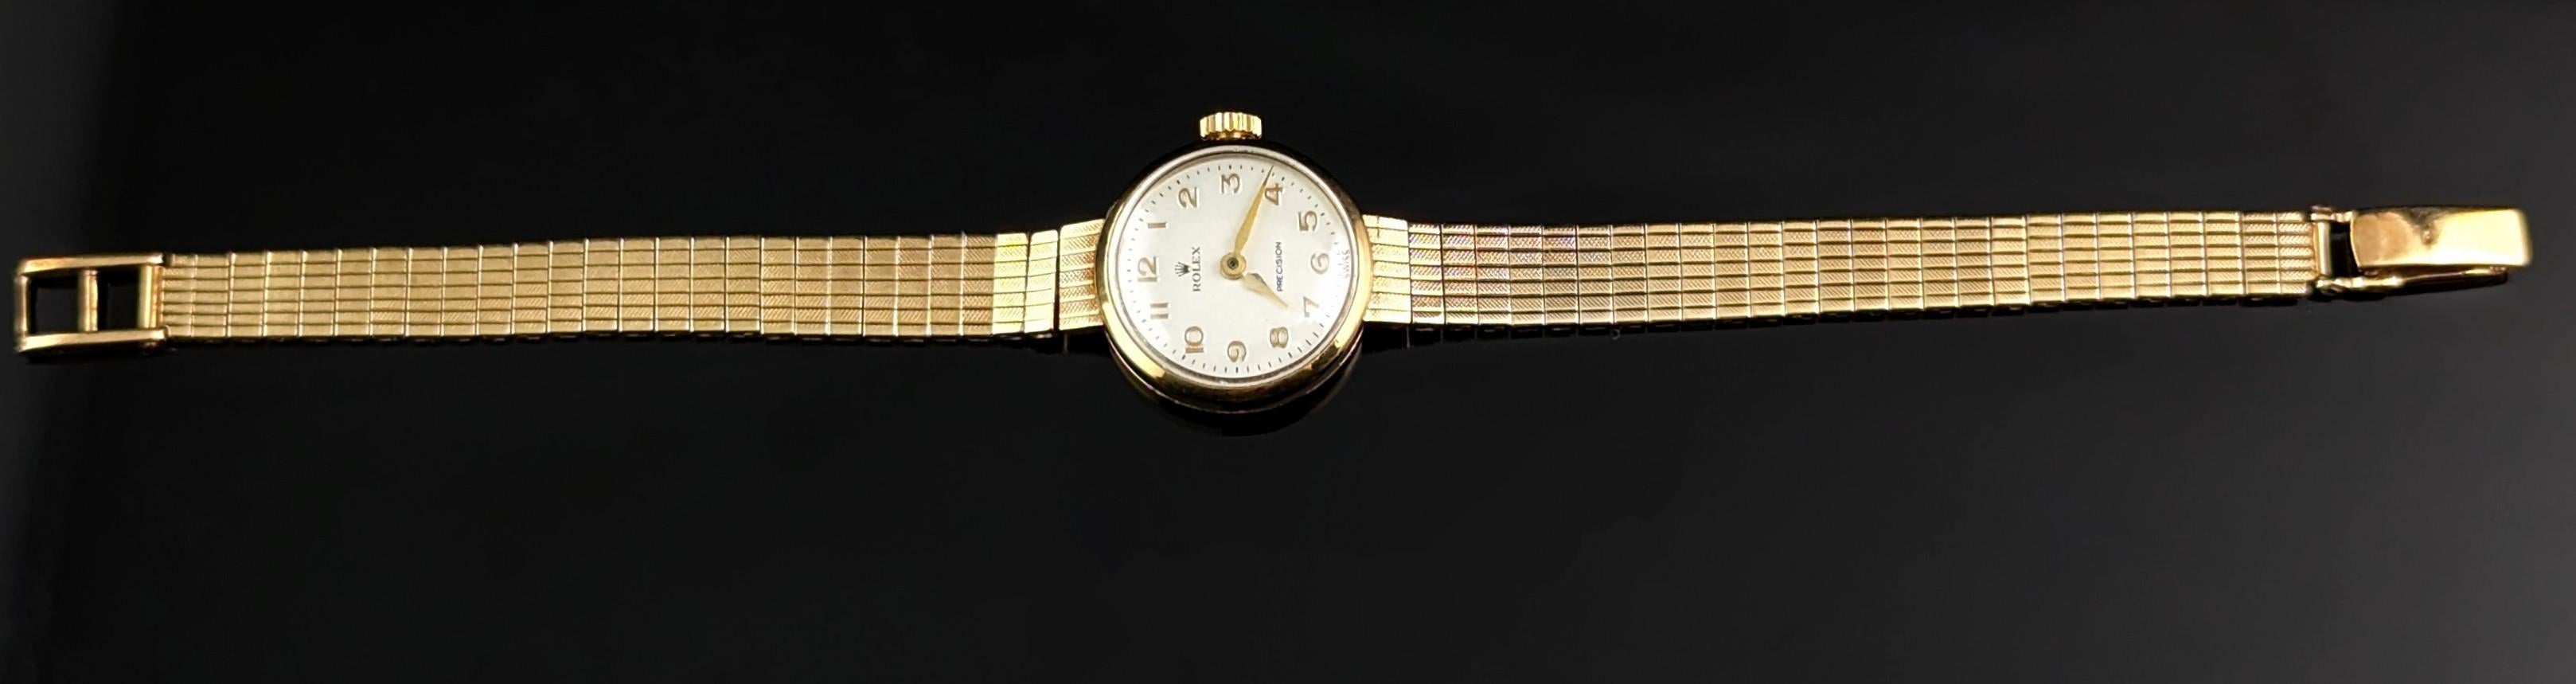 Vintage 9k gold Ladies Rolex Precision wristwatch, boxed watch  For Sale 1